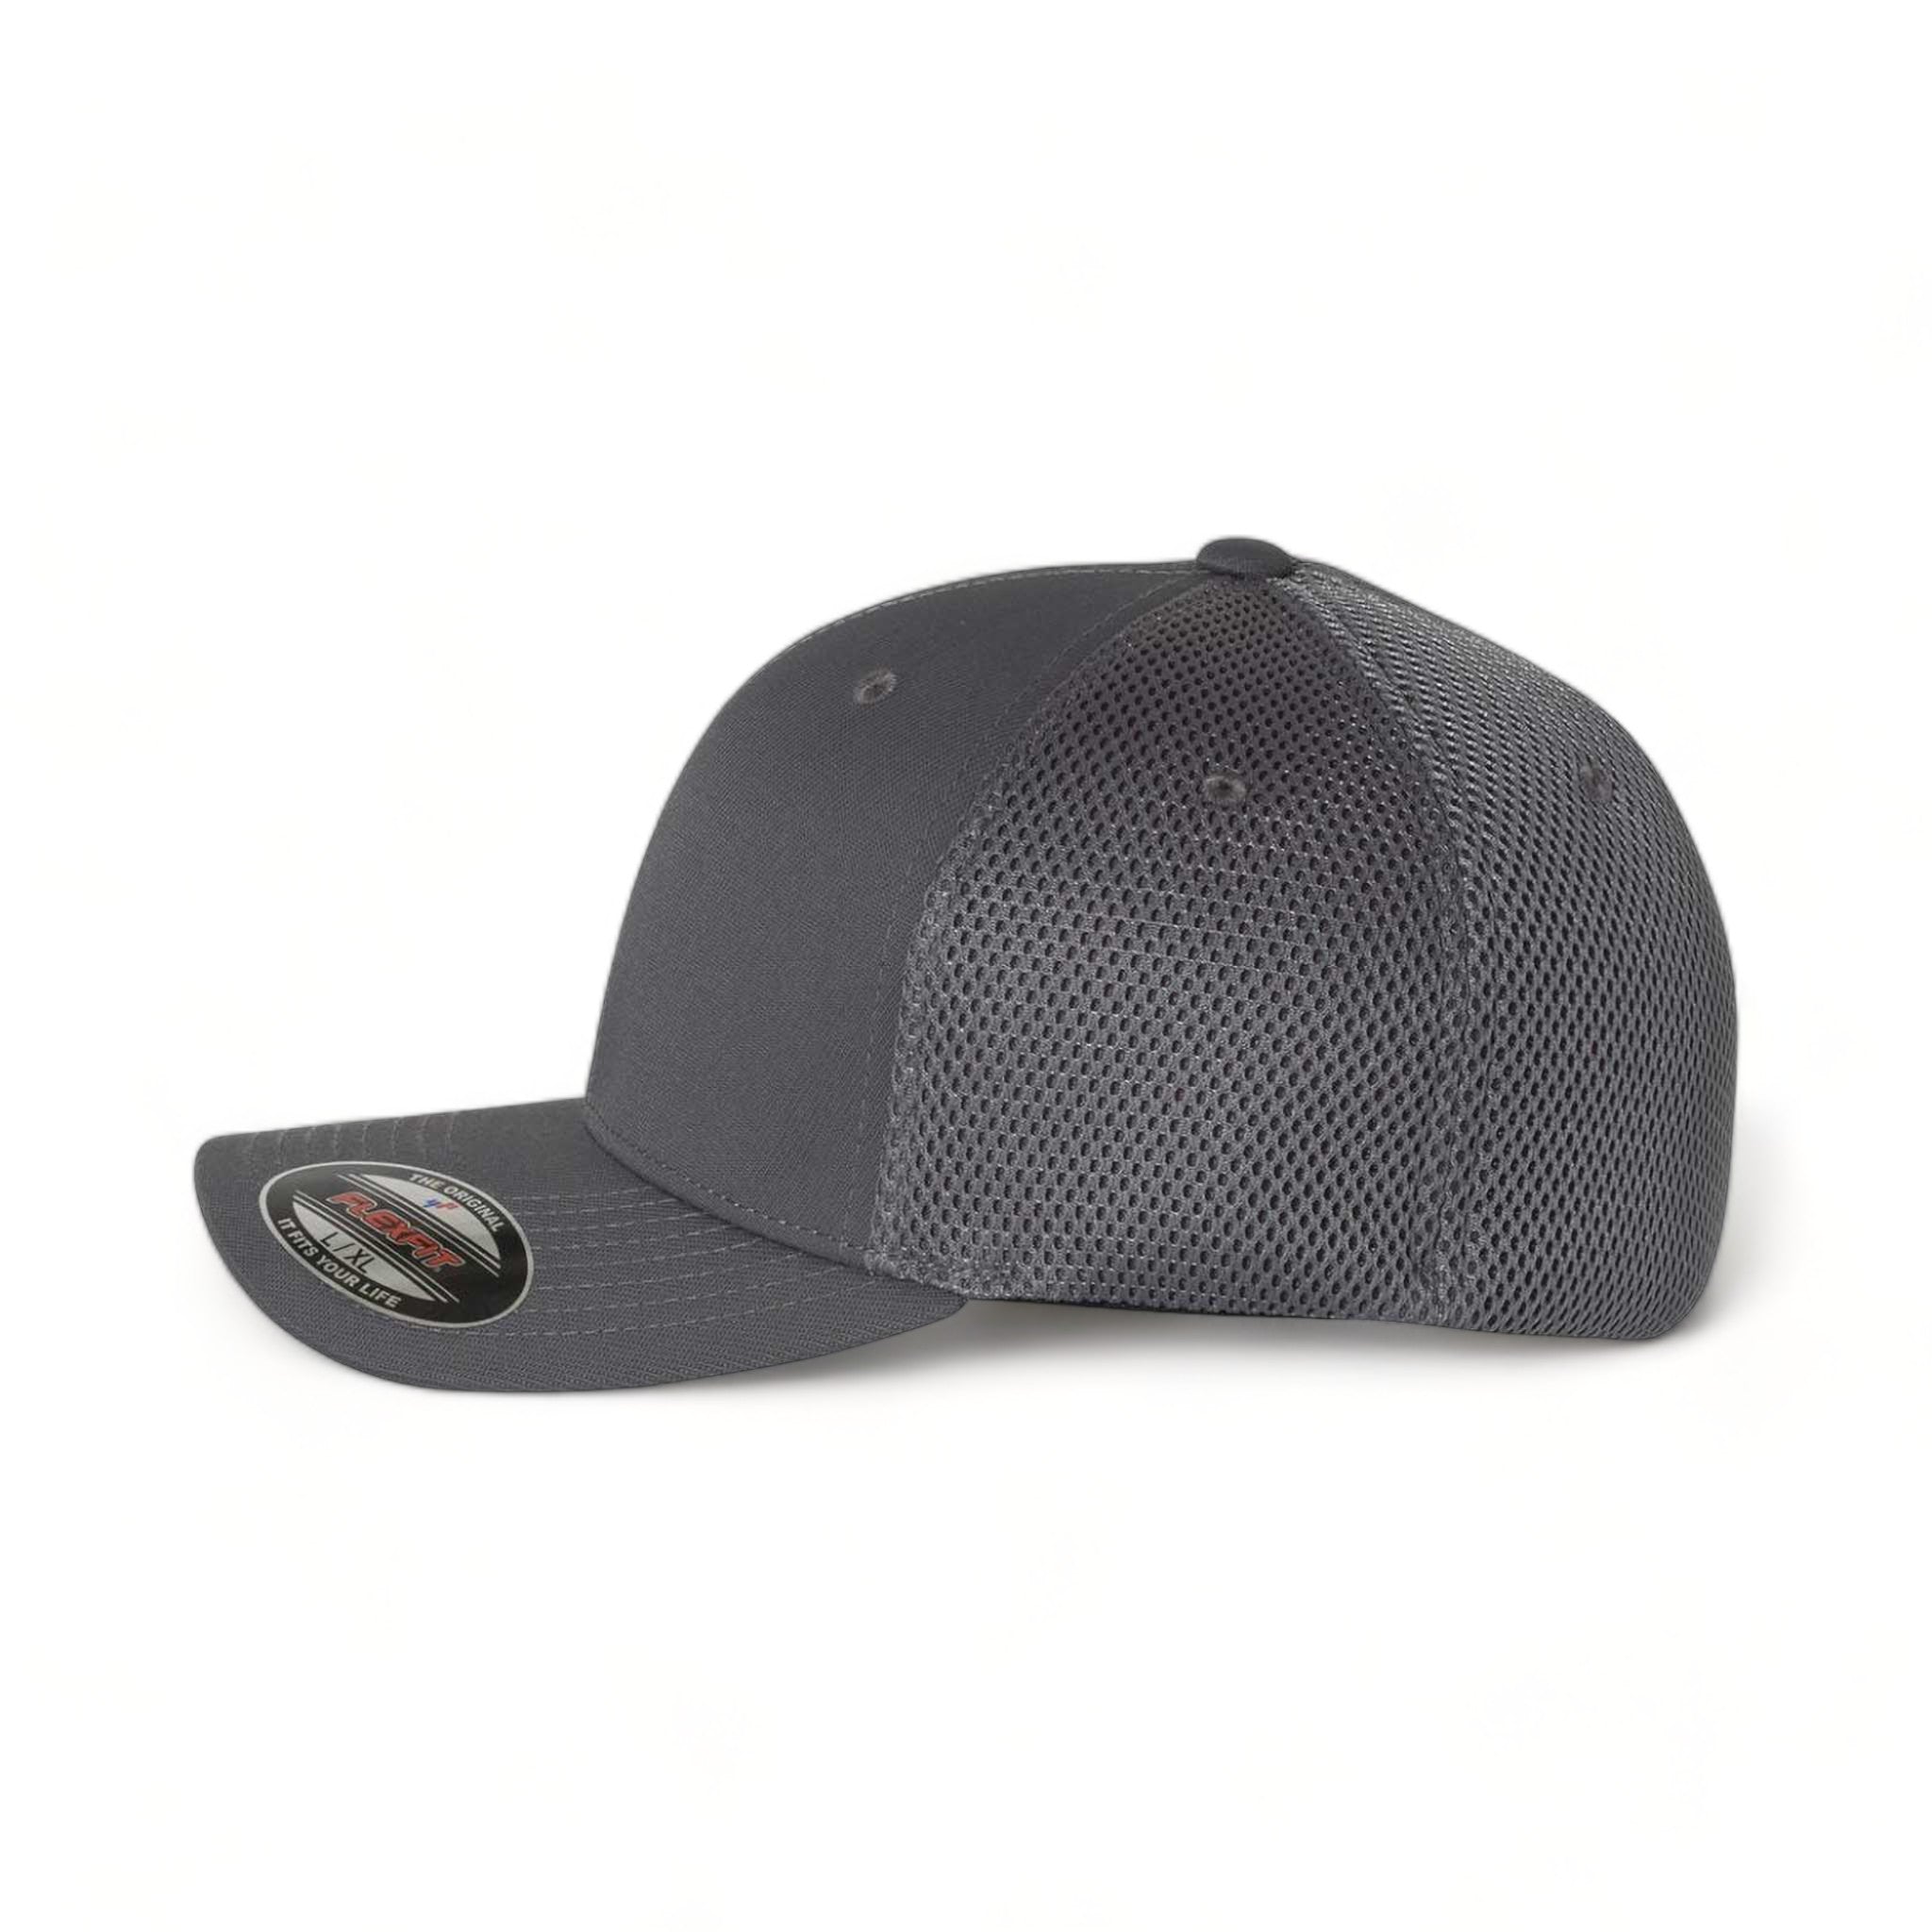 Side view of Flexfit 6533 custom hat in dark grey